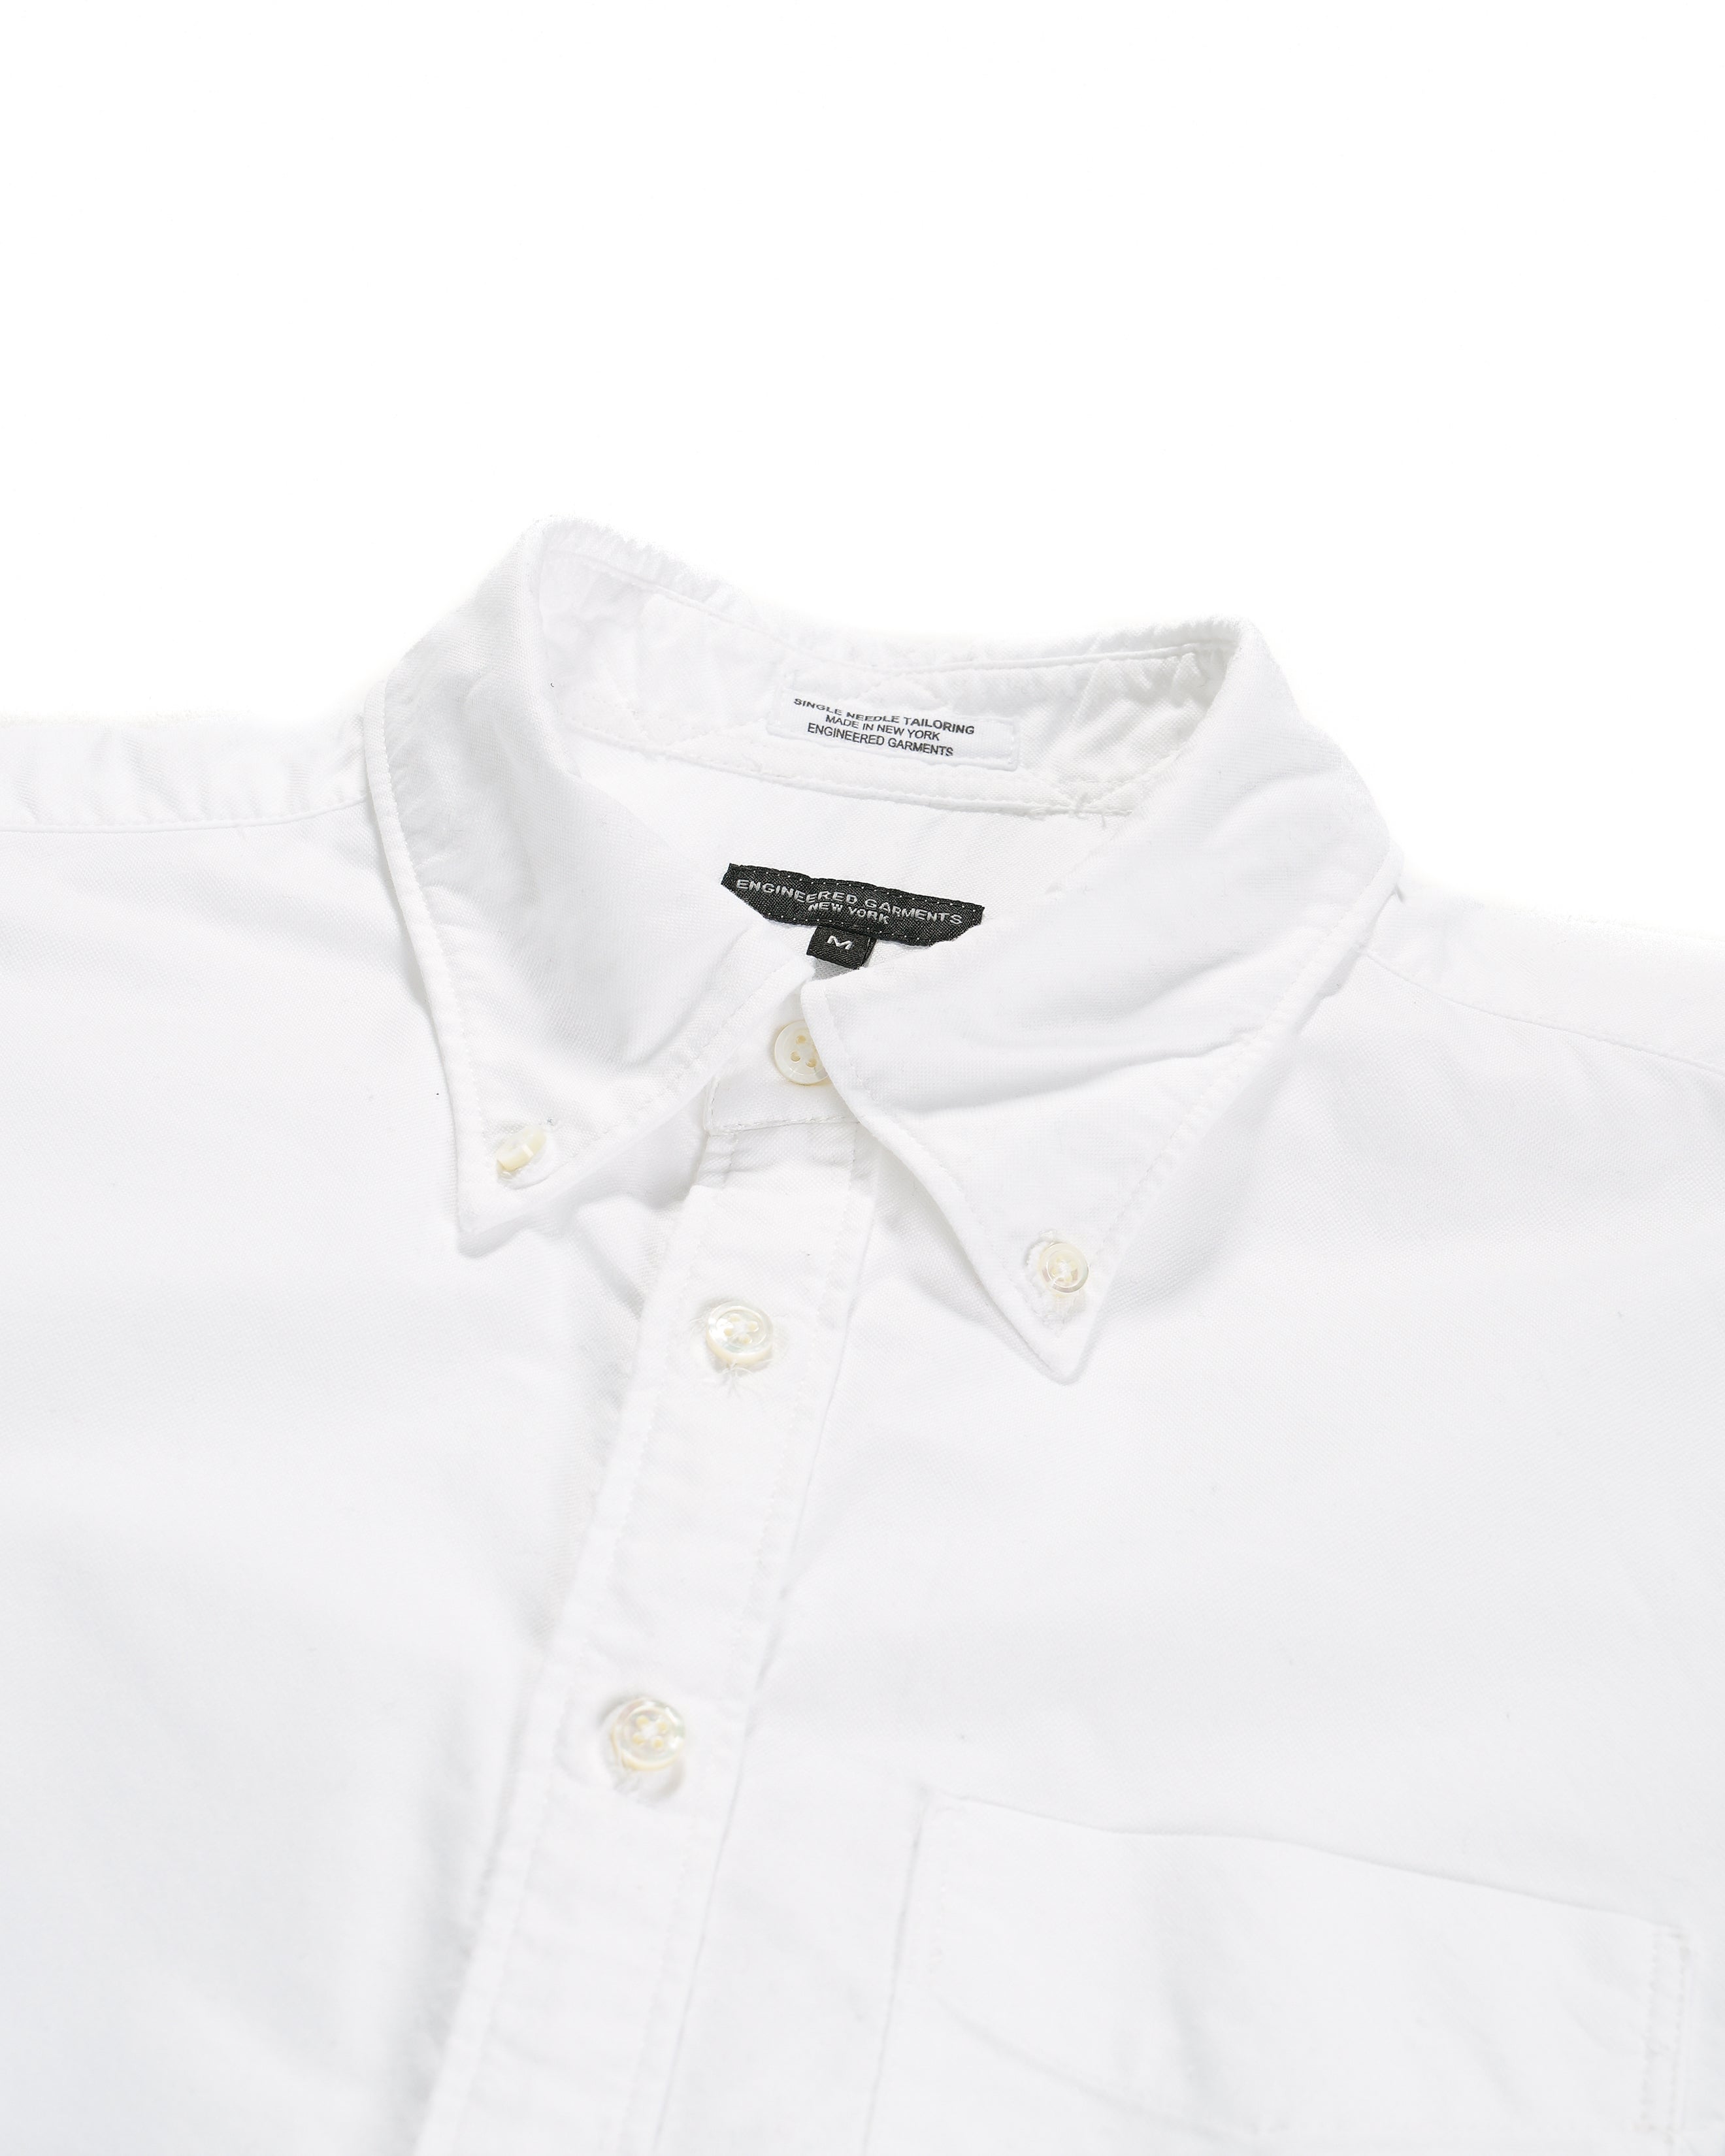 Engineered Garments 19 Century BD Shirt - White Cotton Oxford